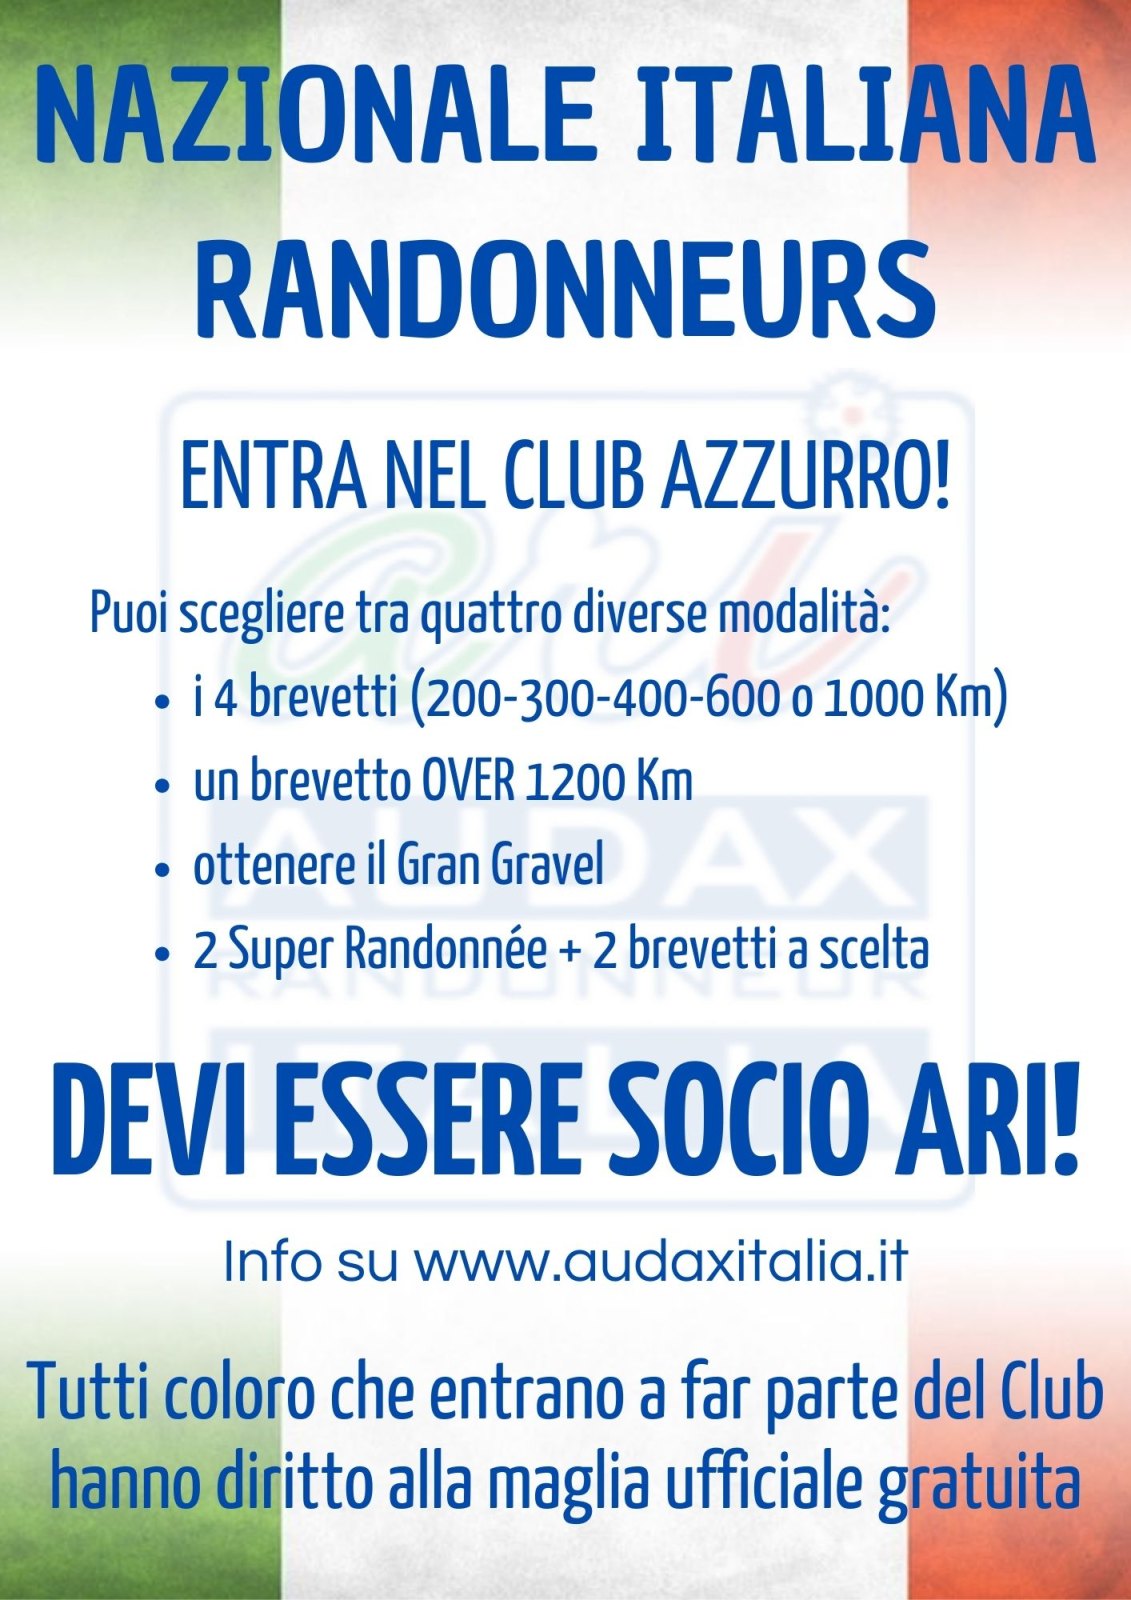 Club Nazionale Italiana